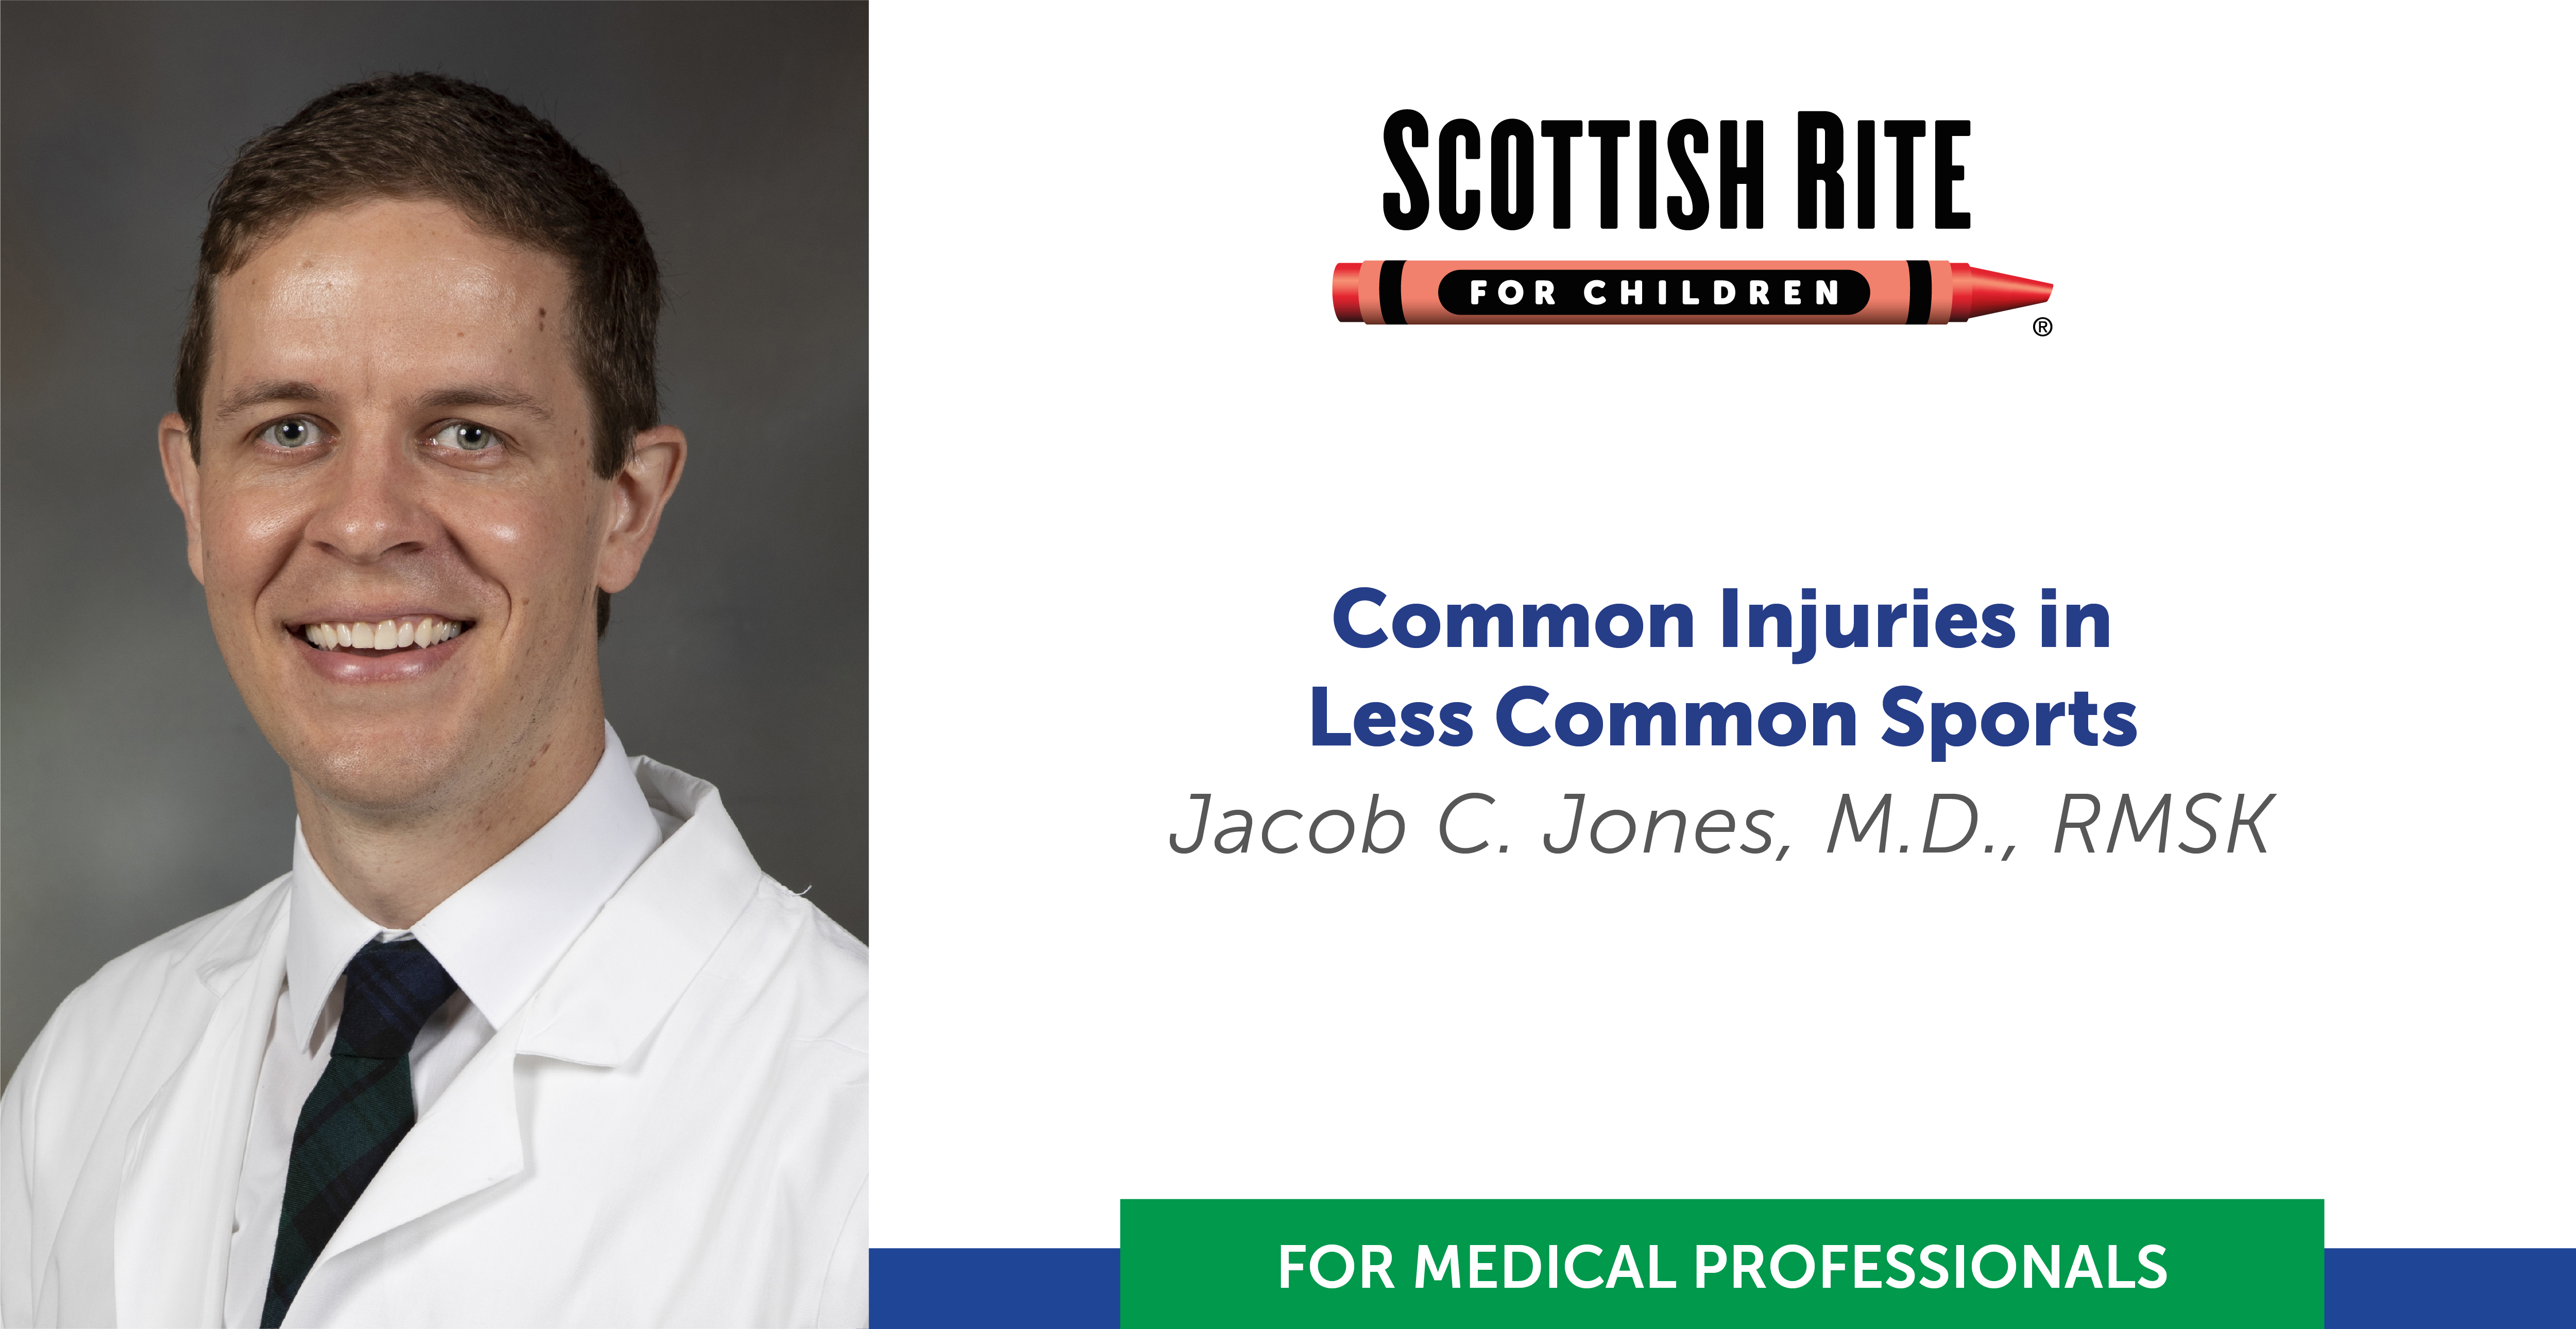 Jacob C. Jones - Common Injuries in Less Common Sports